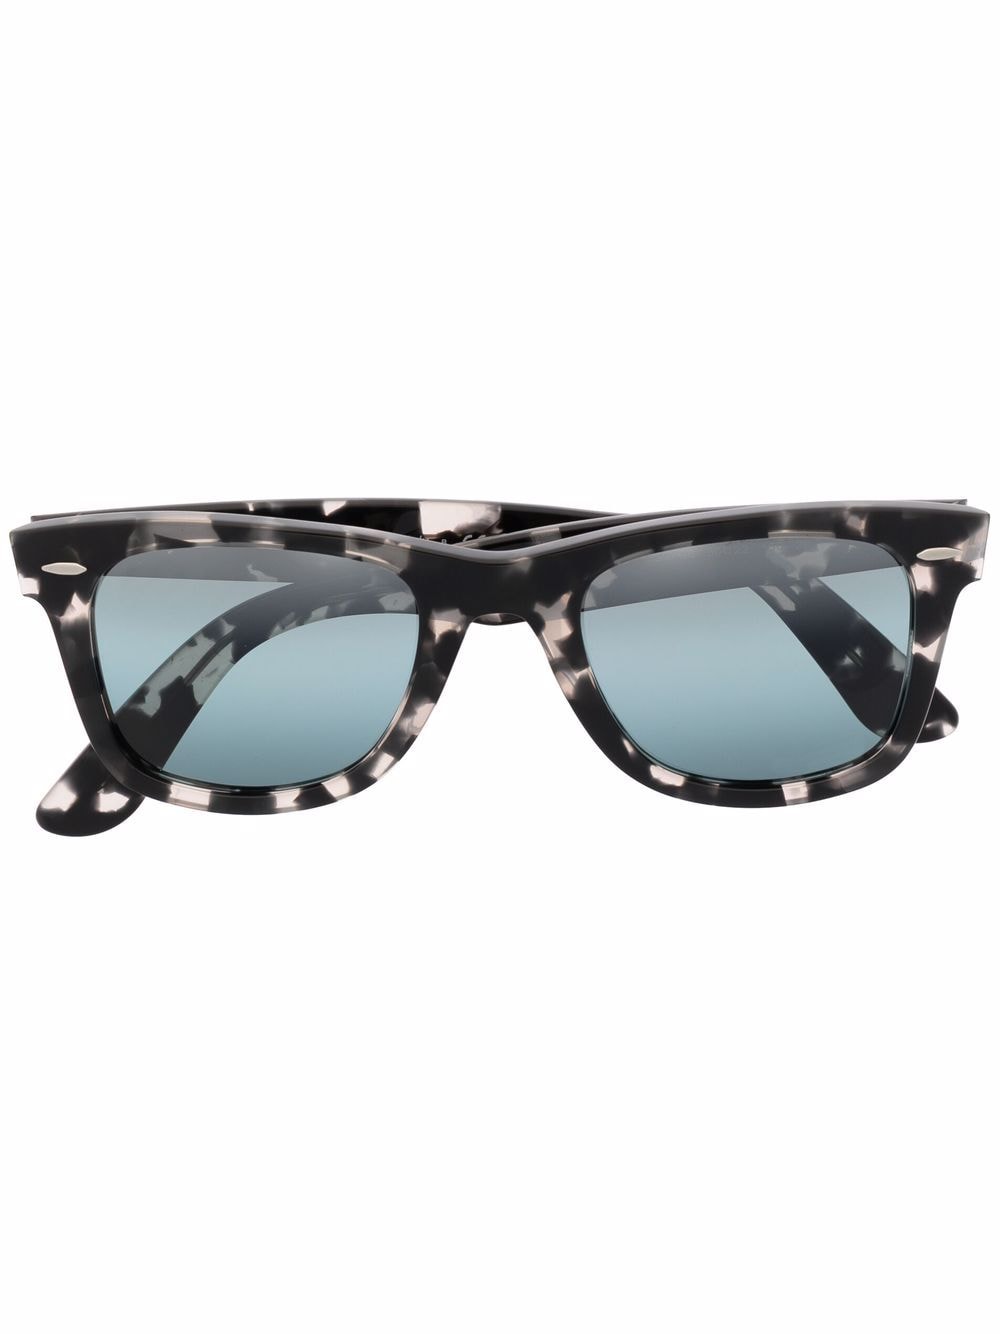 Ray-Ban tortoiseshell wayfarer sunglasses - Black von Ray-Ban